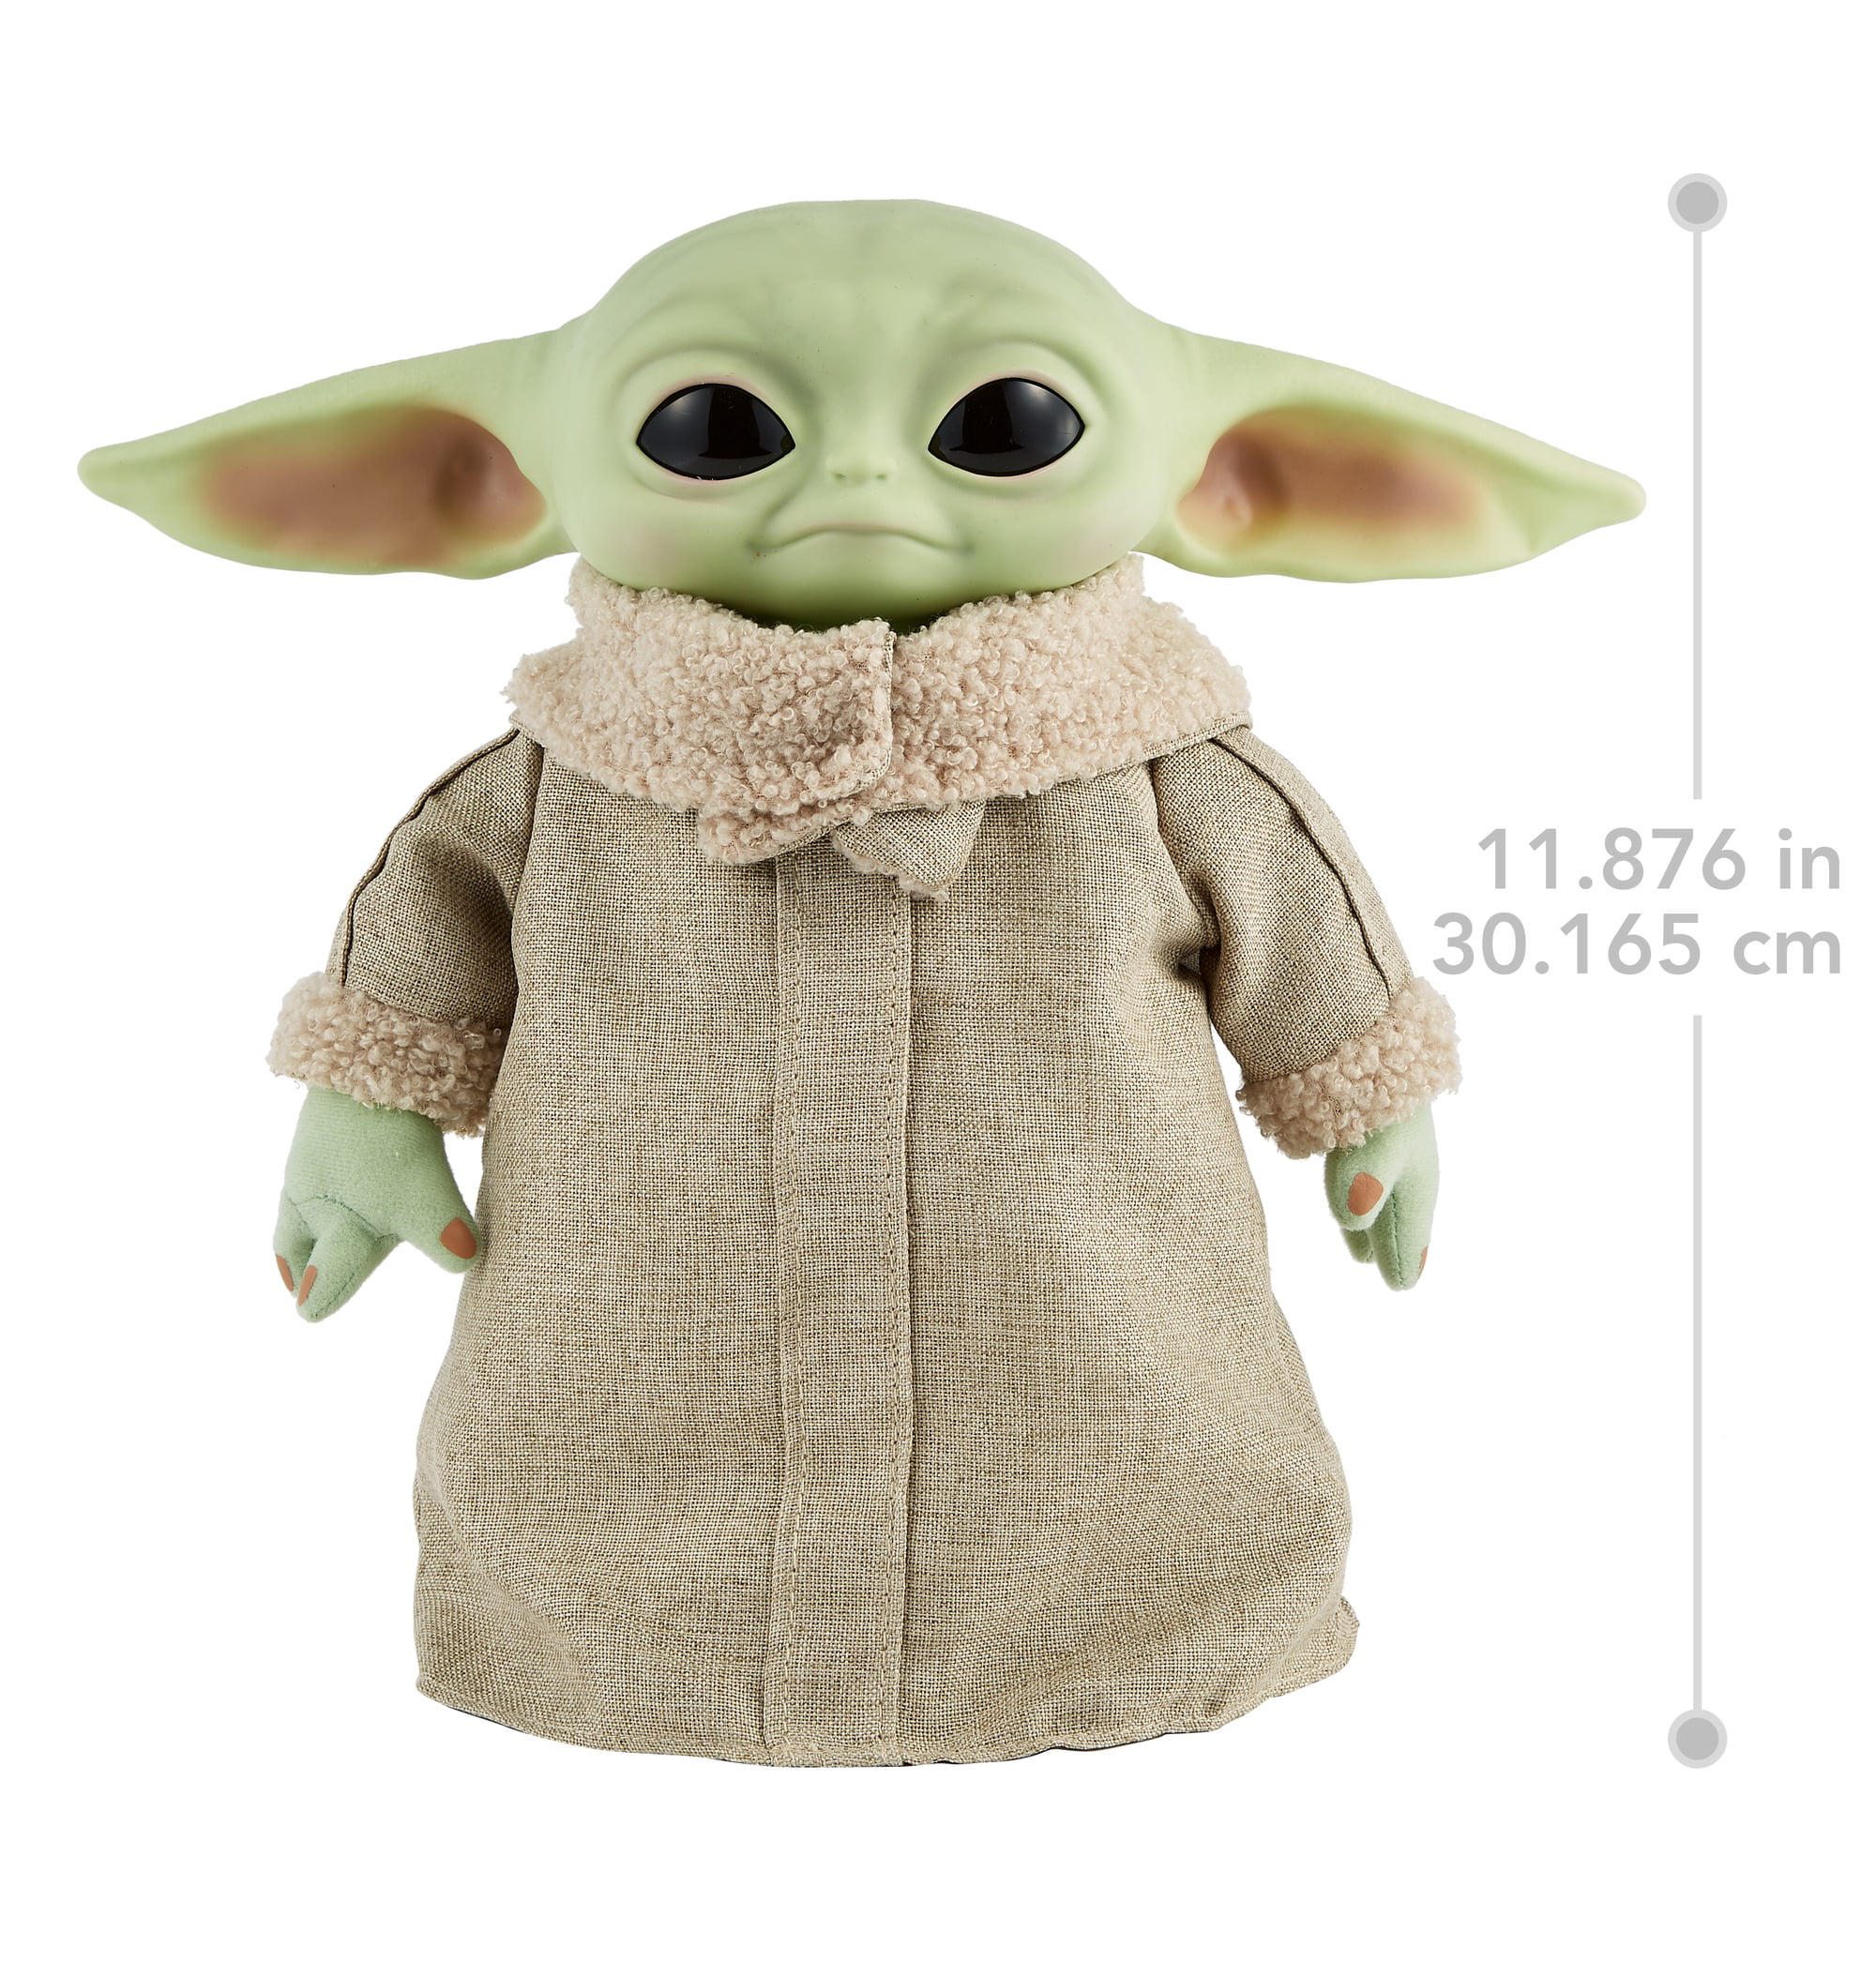 Star Wars Mandalorian Baby Yoda Grogu Action Figure 8 cm 3.5" inch Height Toy 